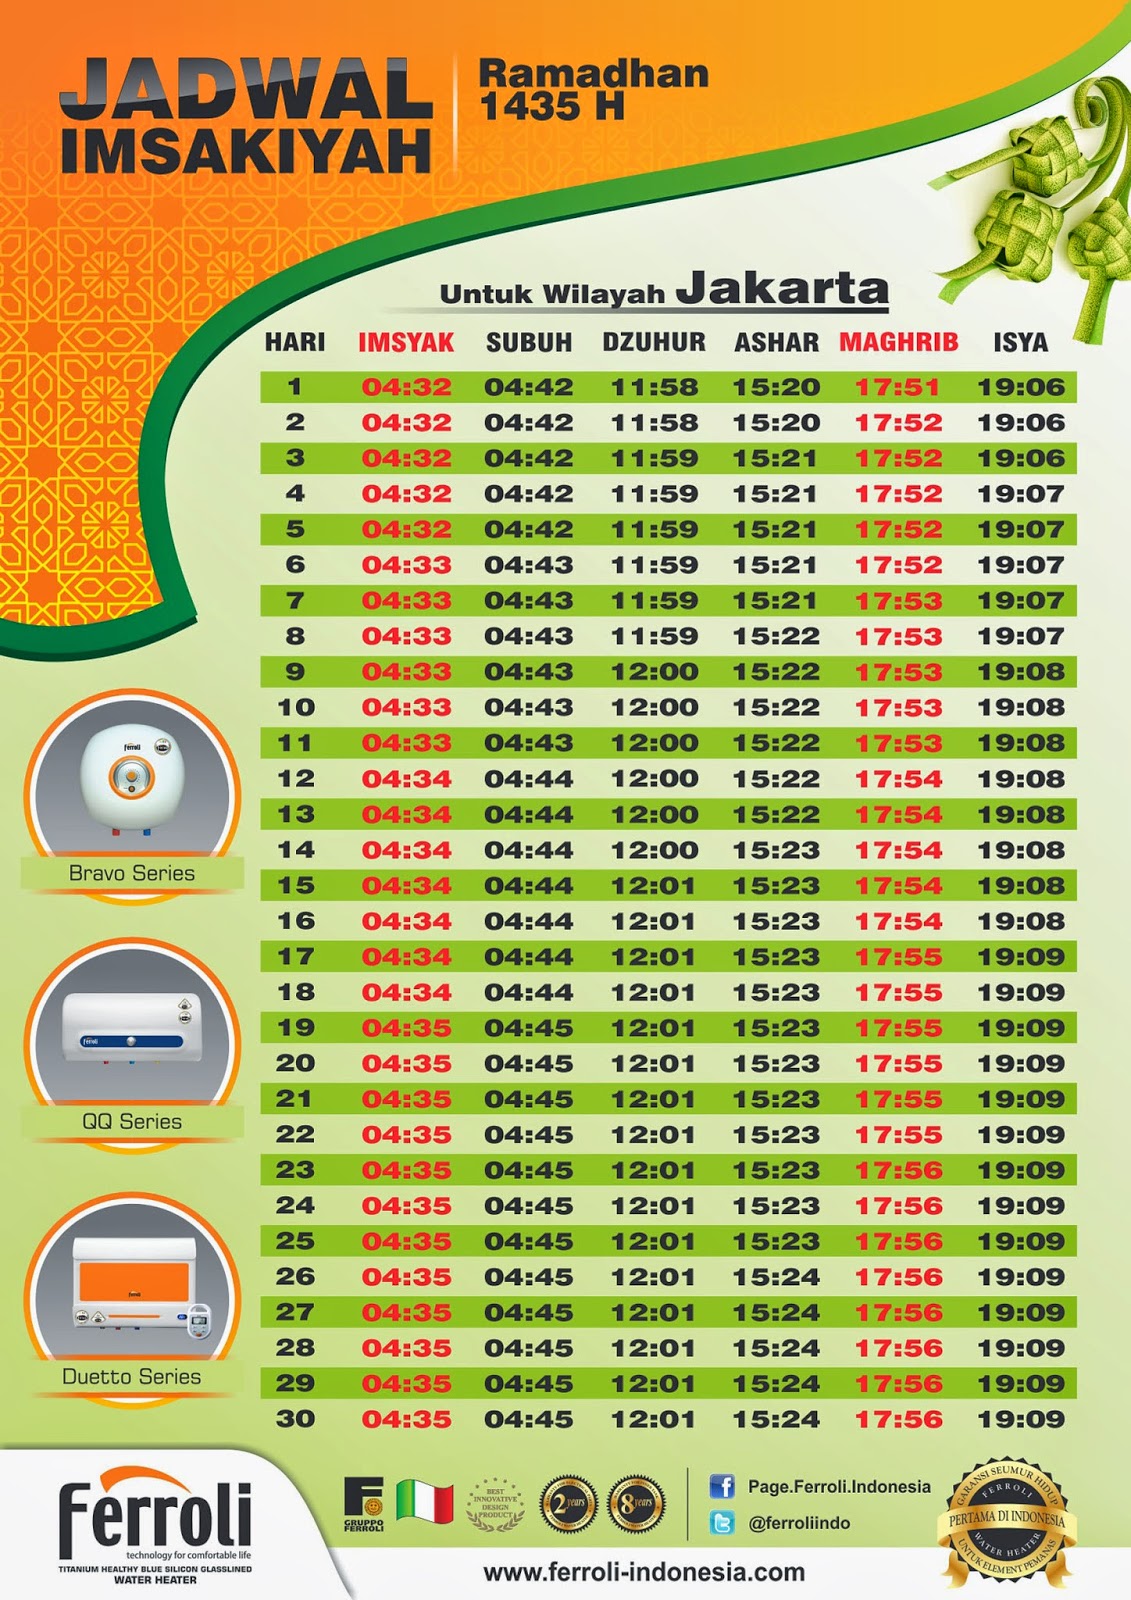 Jadwal Imsakiyah 2014 untuk Wilayah Jakarta ~ BlogNya Mustafid